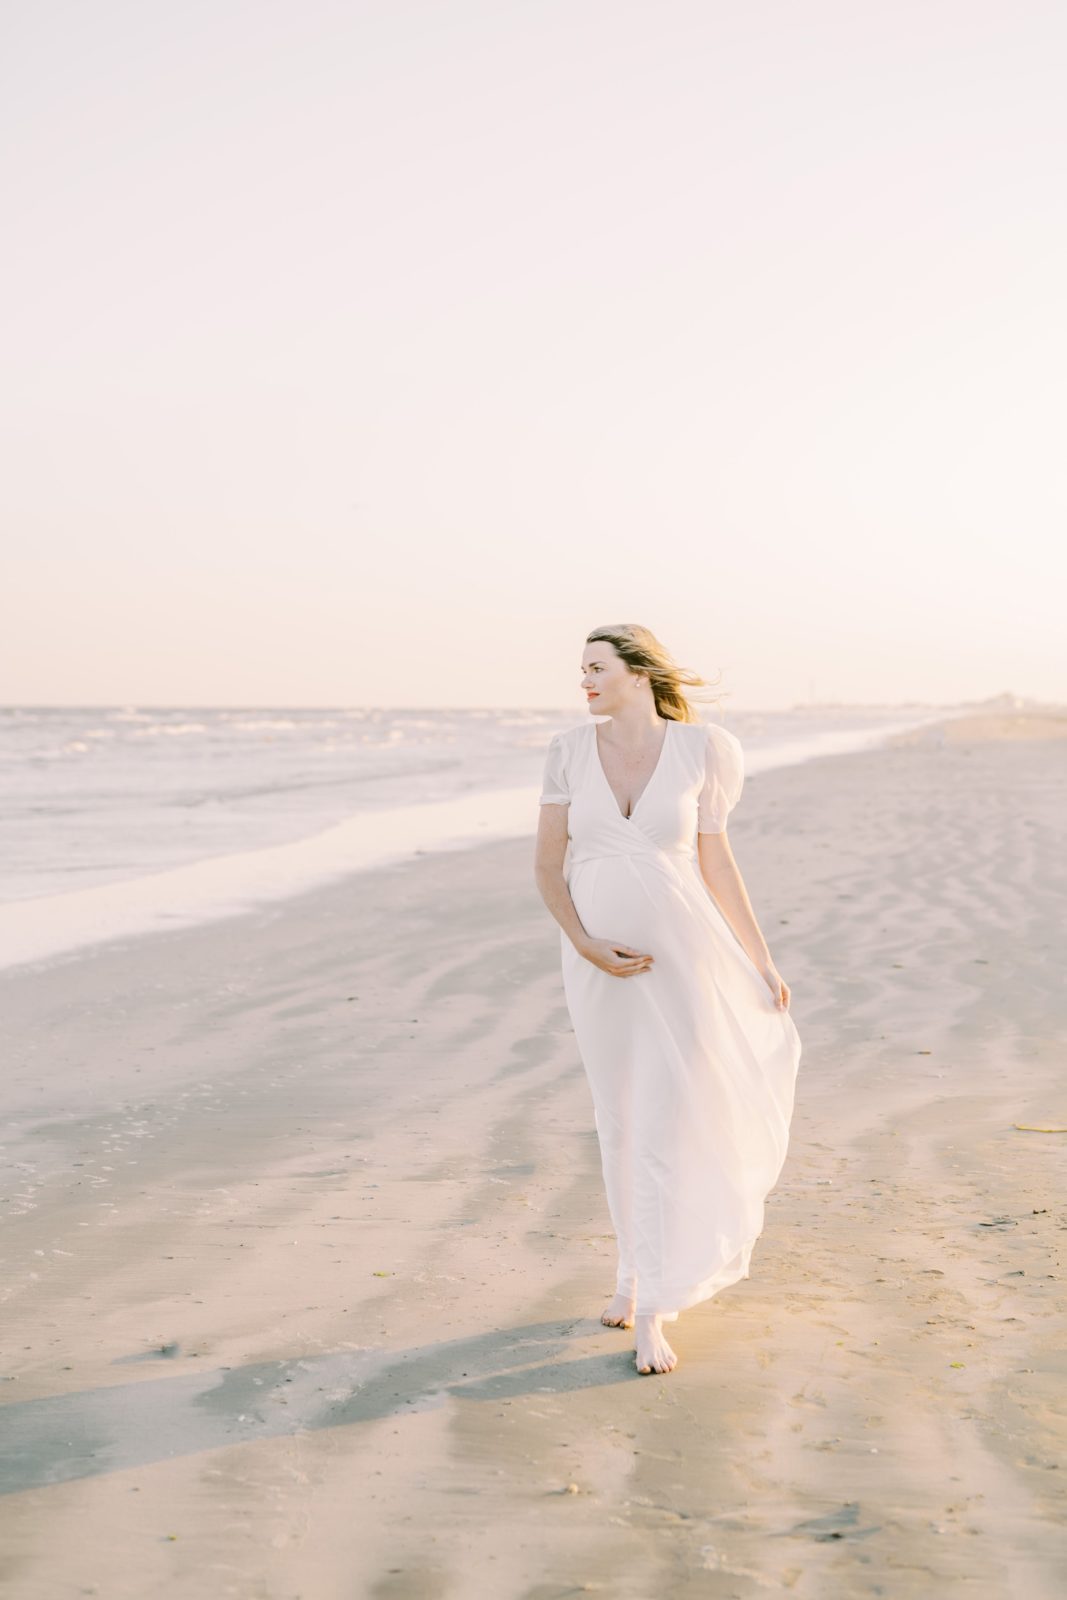 Timeless maternity portrait of woman walking along the beach by Christina Elliott Photography. white maternity dress #ChristinaElliottPhotography #ChristinaElliottFamilies #GalvestonPhotography #Beachmaternityphotography #Texasfamilyphotographers